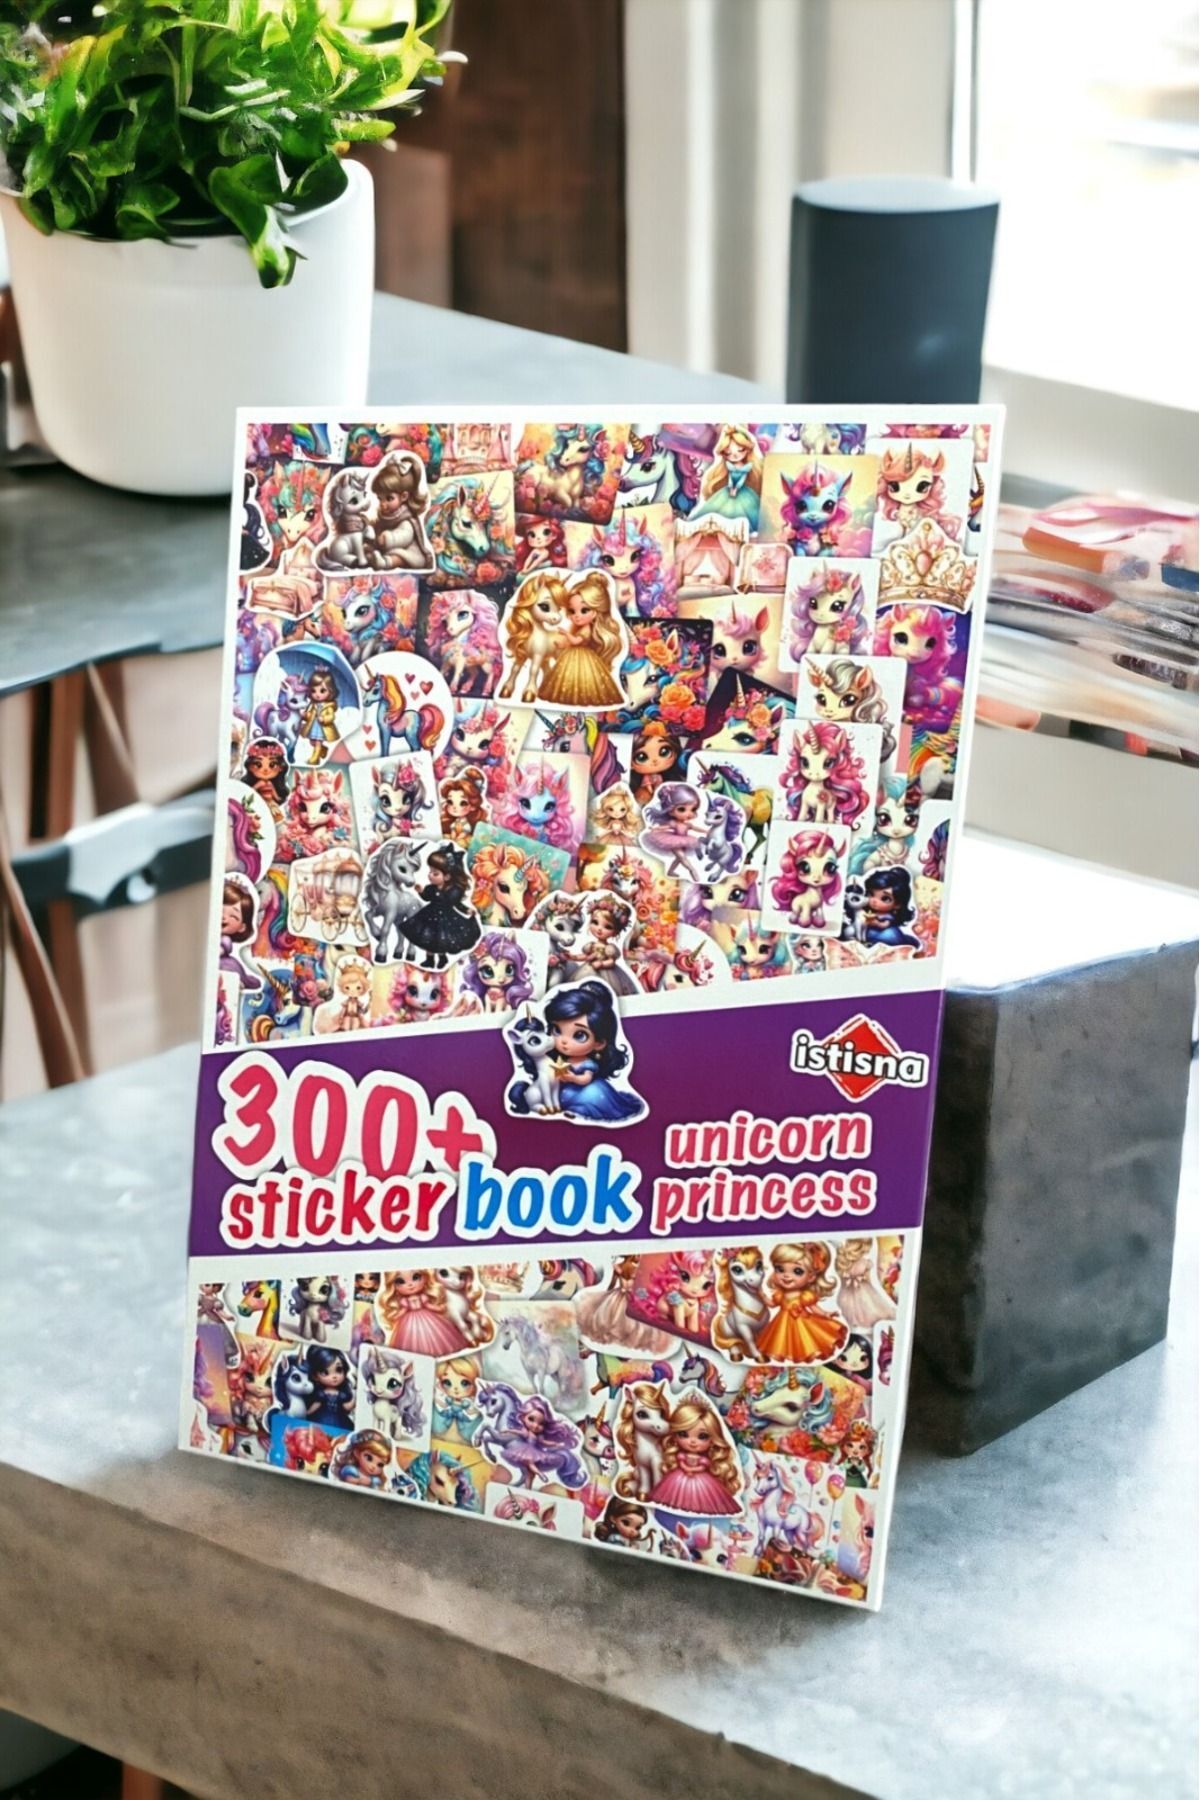 İstisna 17 Sayfa 300 Unicorn Prensesler Sticker Book Etiket Kitabı Sticker Defteri A5 Boyut Etiket Seti